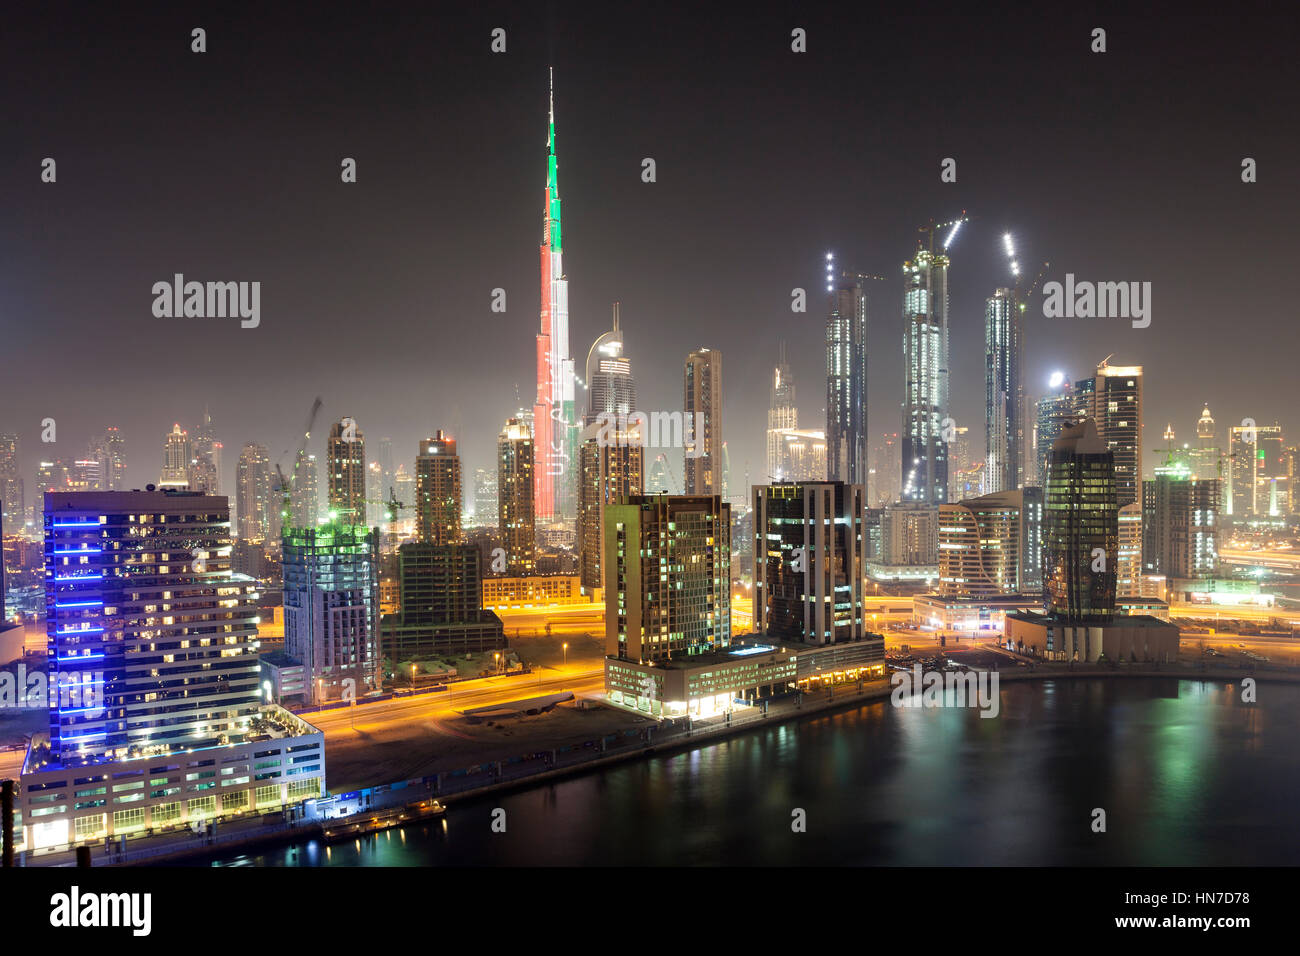 DUBAI, UAE - DEC 5, 2016: Skyline of Dubai downtown at night. Burj Khalifa illuminated in national colors. United Arab Emirates, Middle East Stock Photo